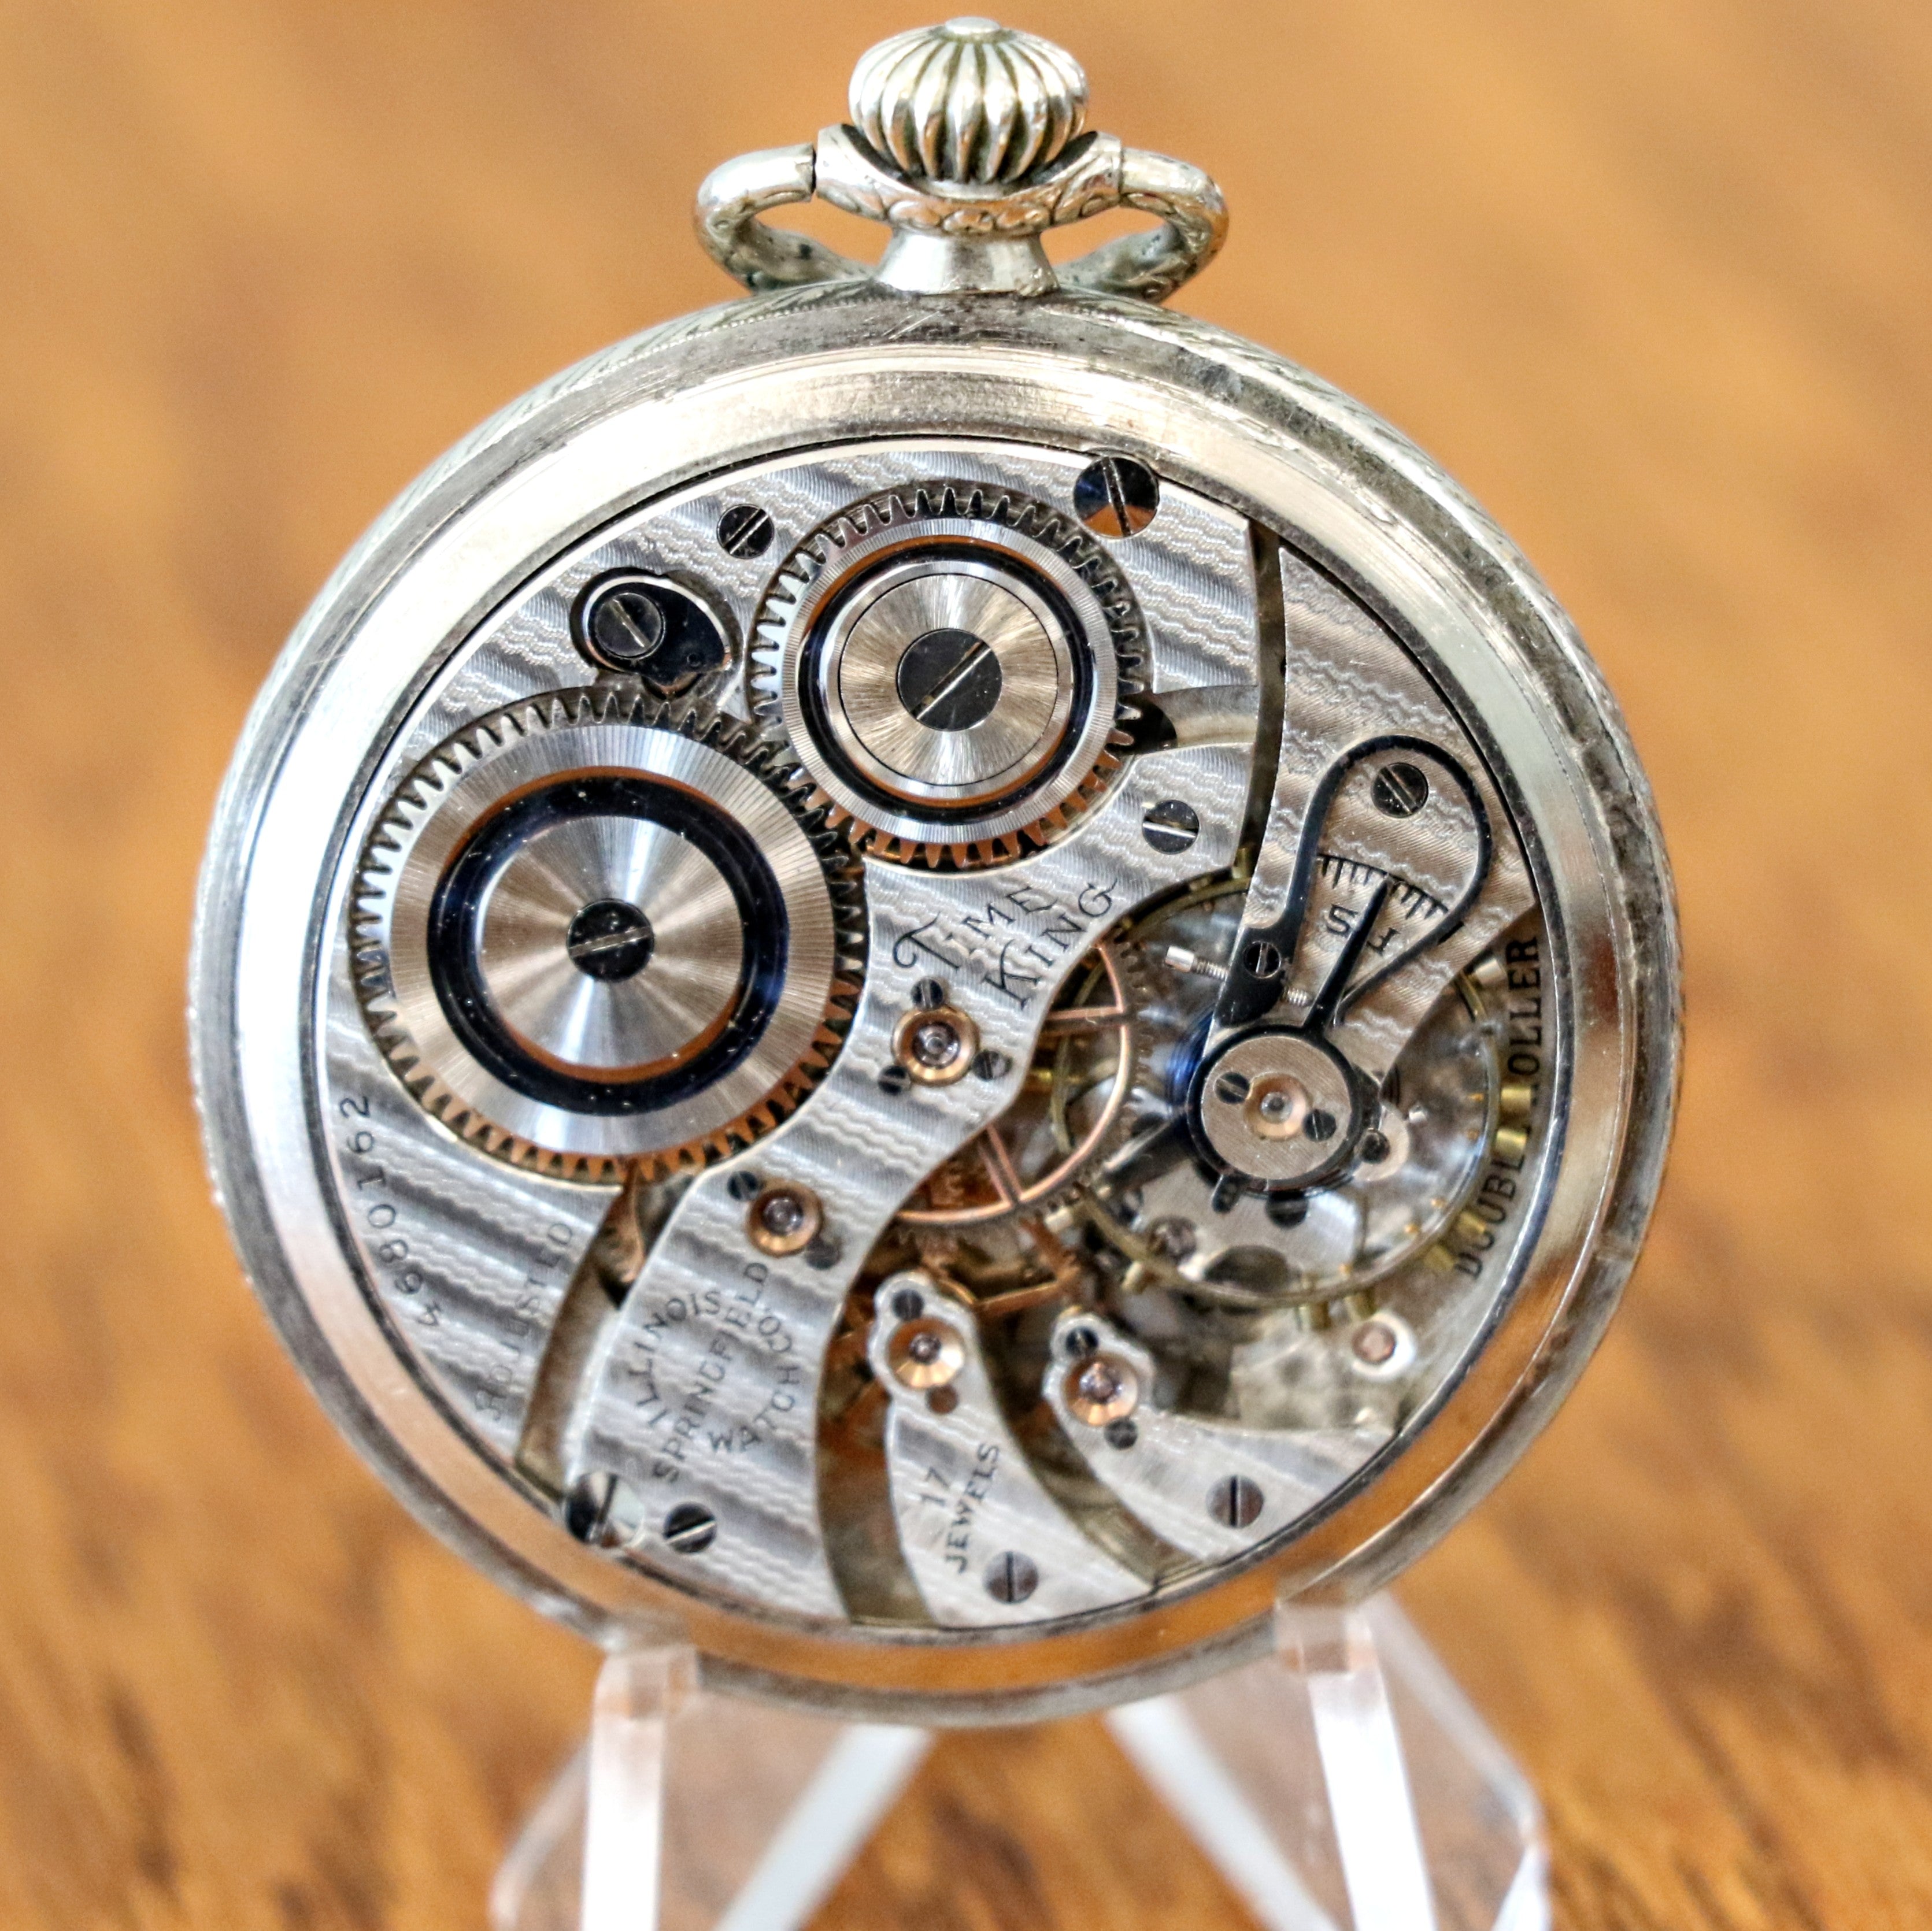 1925 ILLINOIS Time King Pocket Watch Size 12s 17 Jewels Grade 405 U.S.A. Made Art Deco Watch